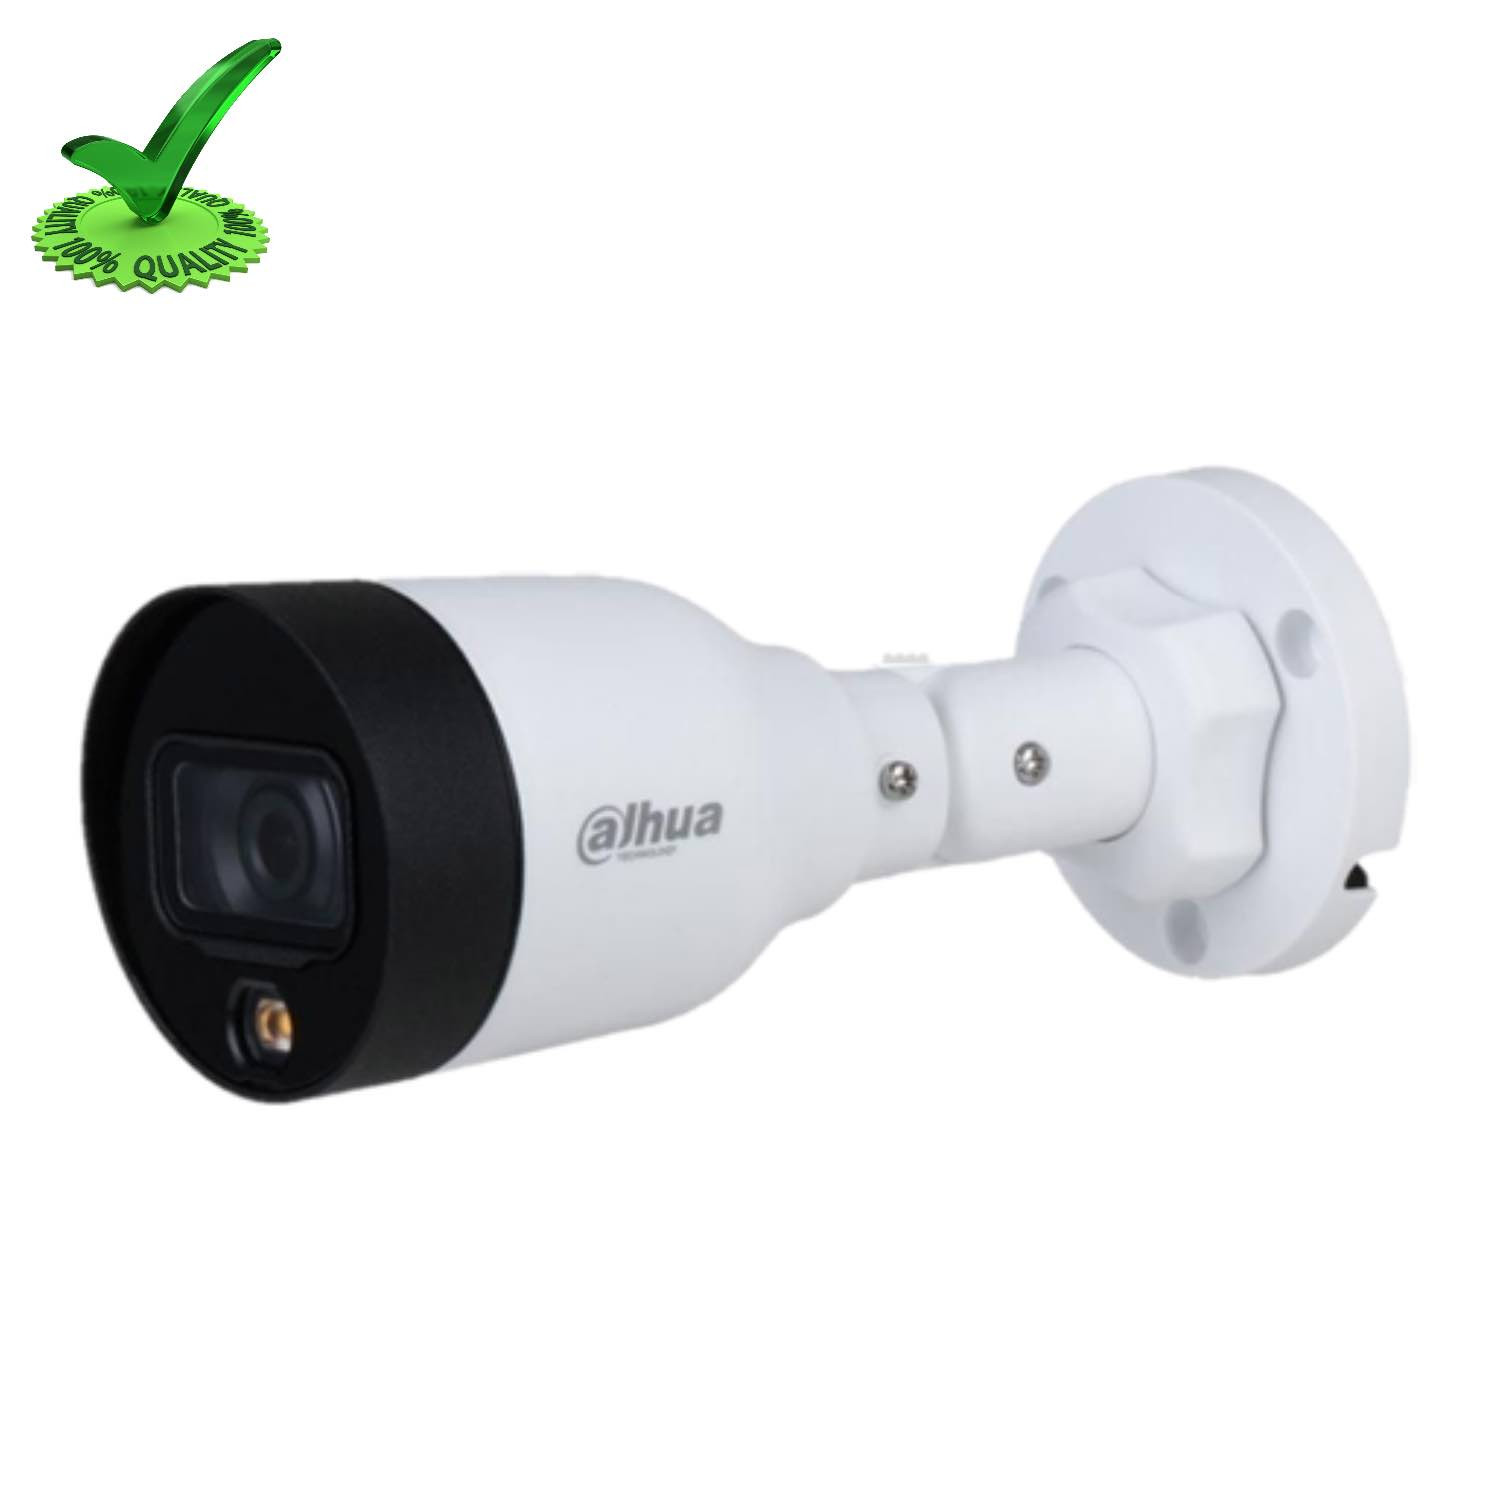 Dahua DH-IPC-HFW1230S1P-S4 2MP IP Bullet Camera